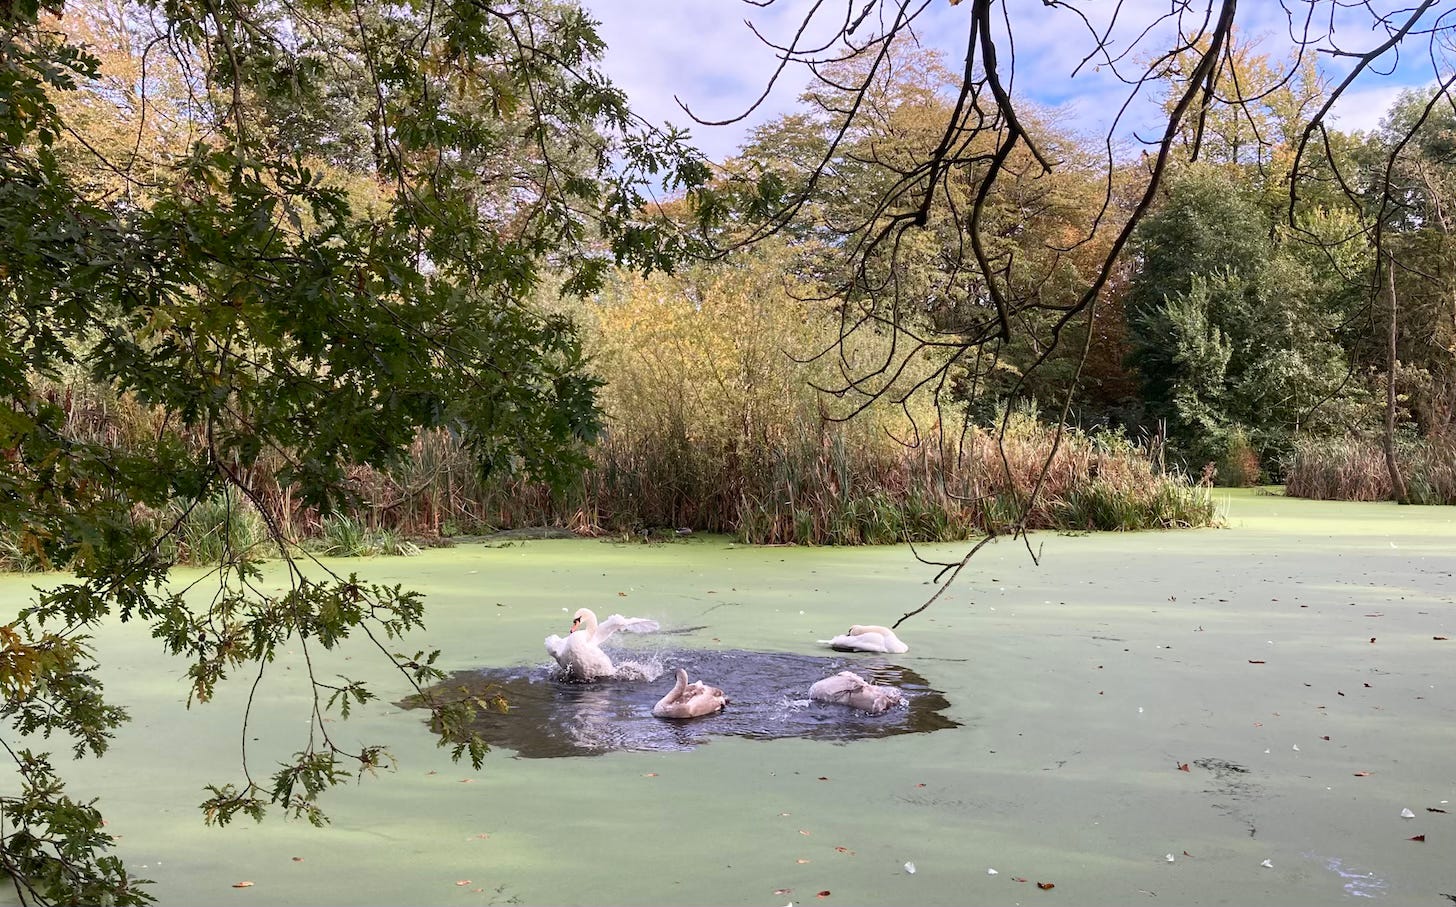 Lake covered in algae with swans preening